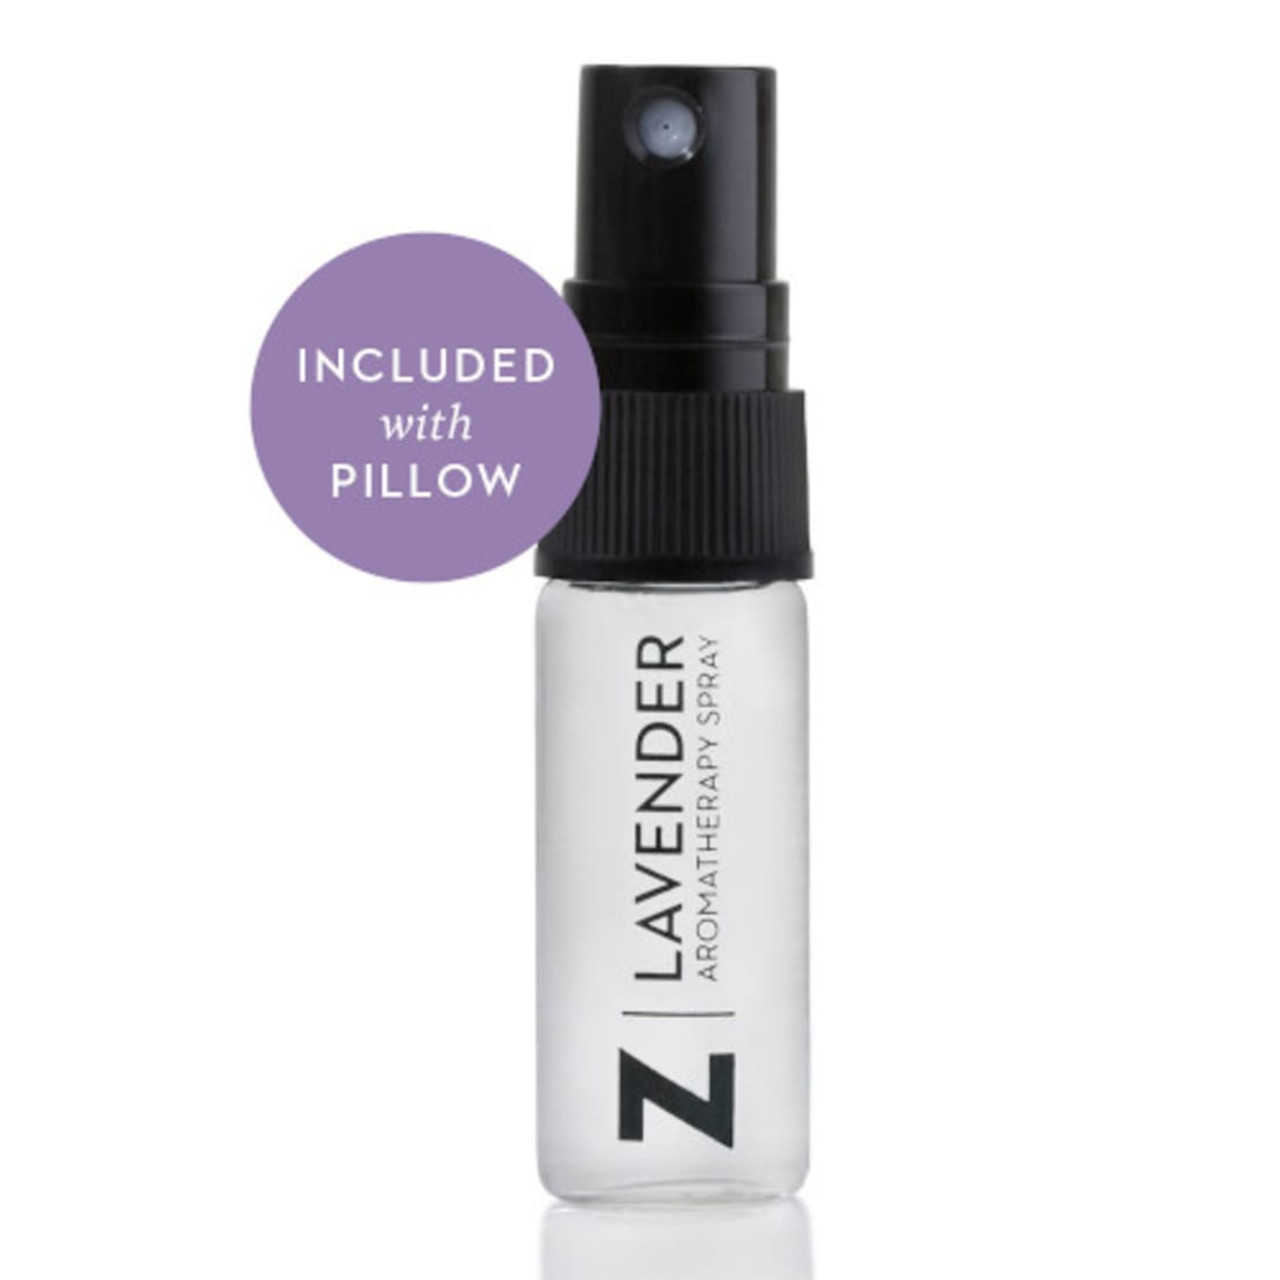 Zoned Dough® Lavender with Spritzer - Queen (ZZQQMPASZL)